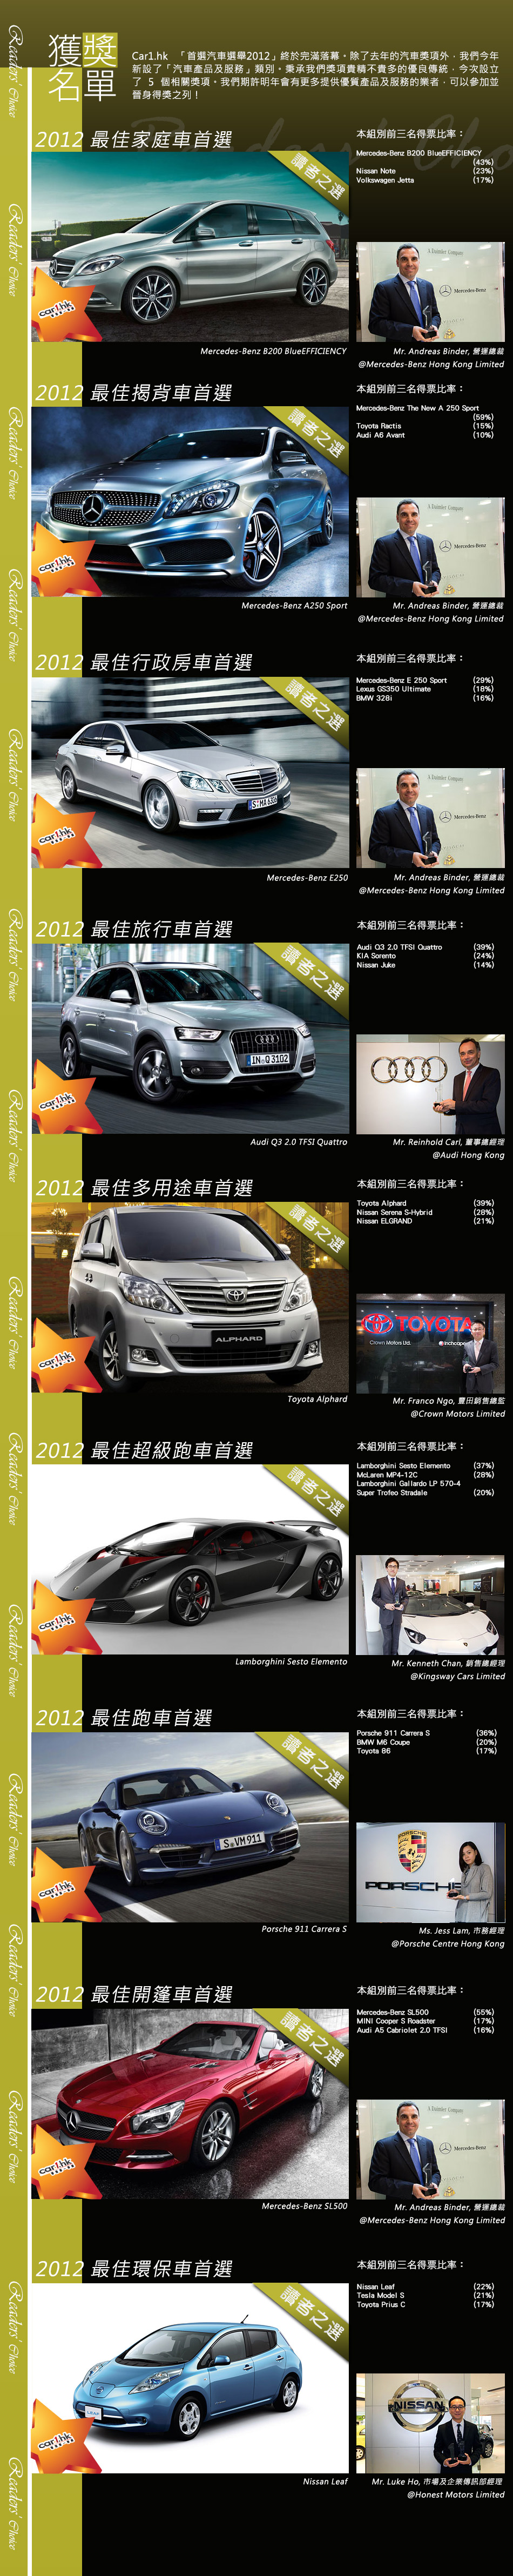 Car1.hk「首選汽車選舉 2012」「Readers’ Choice 讀者之選」